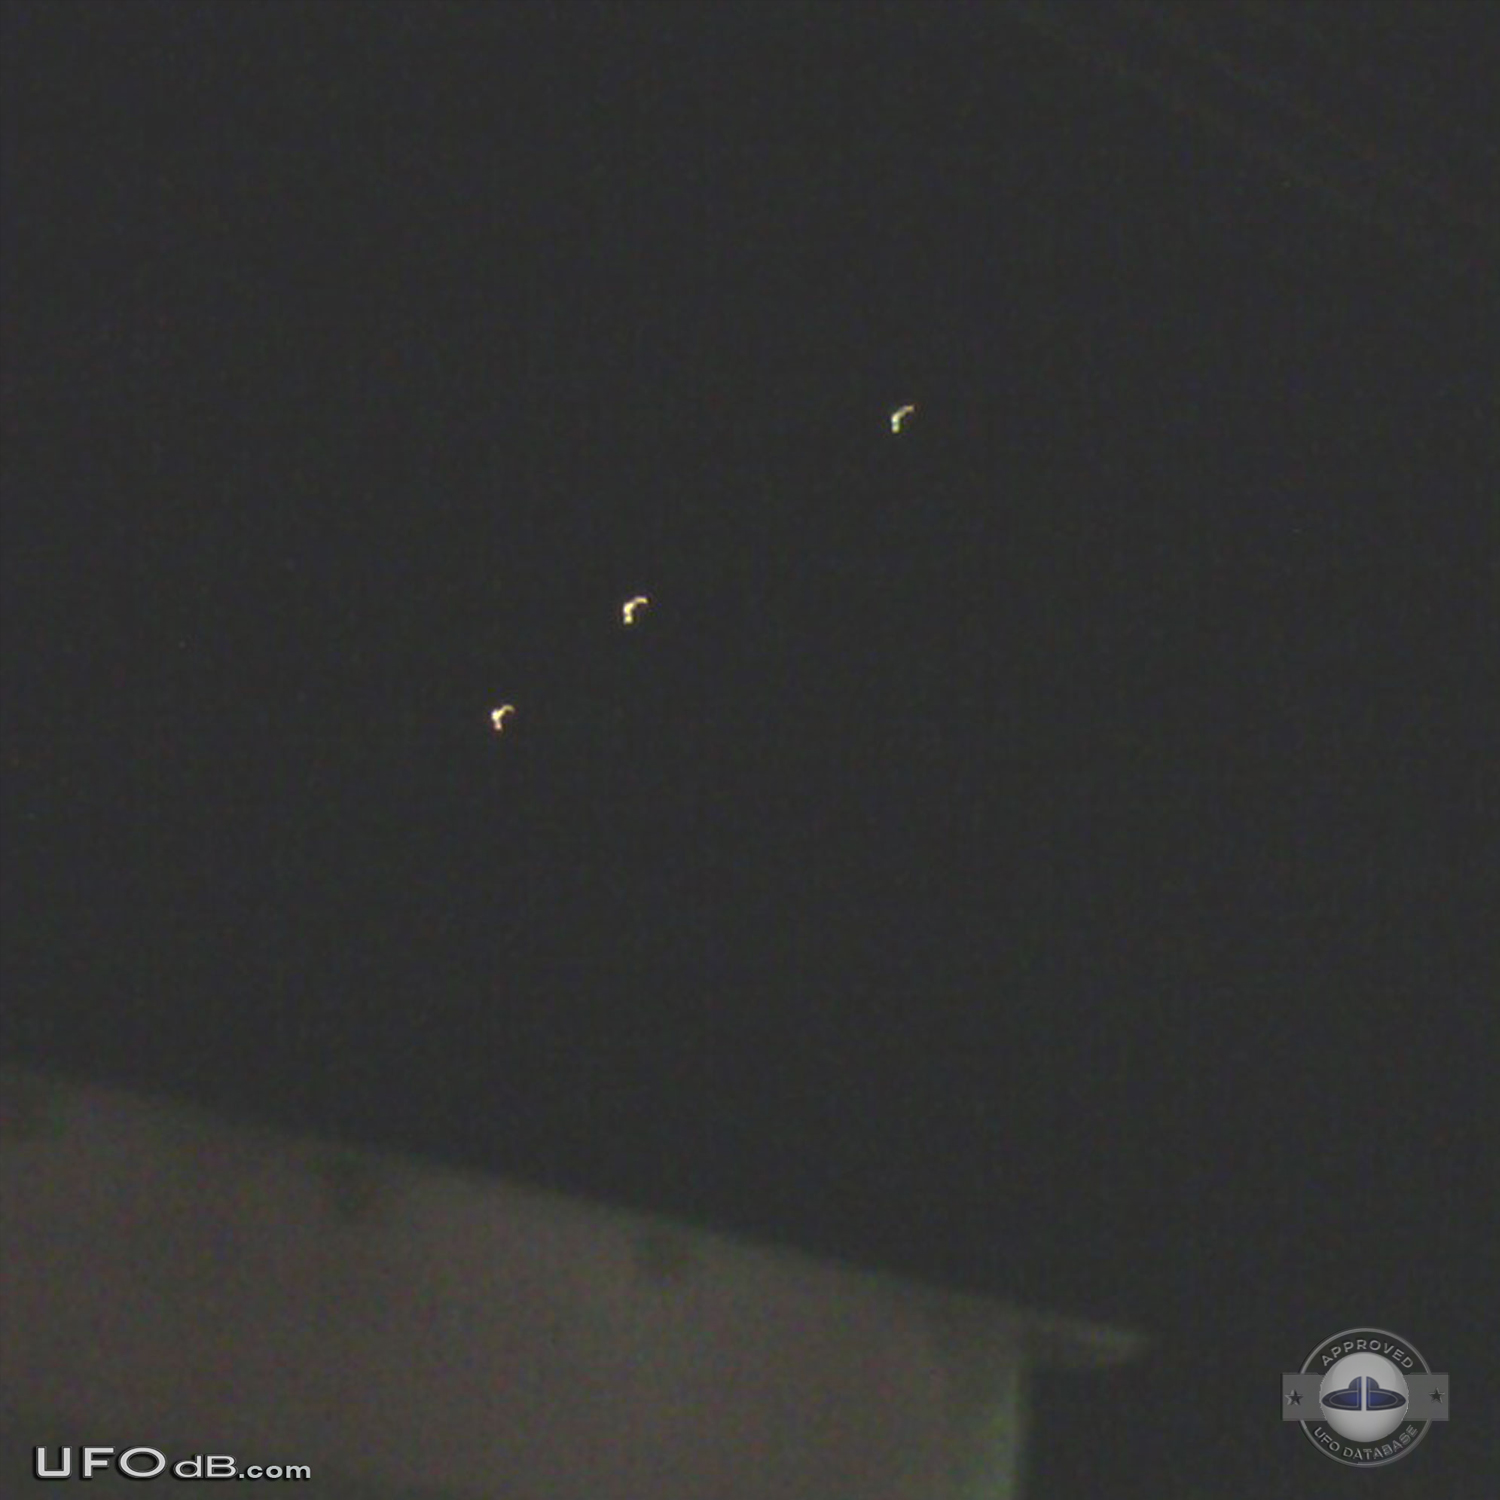 Fleet of three Boomerang UFOs passing over Granados, Mexico 2012 UFO Picture #476-1